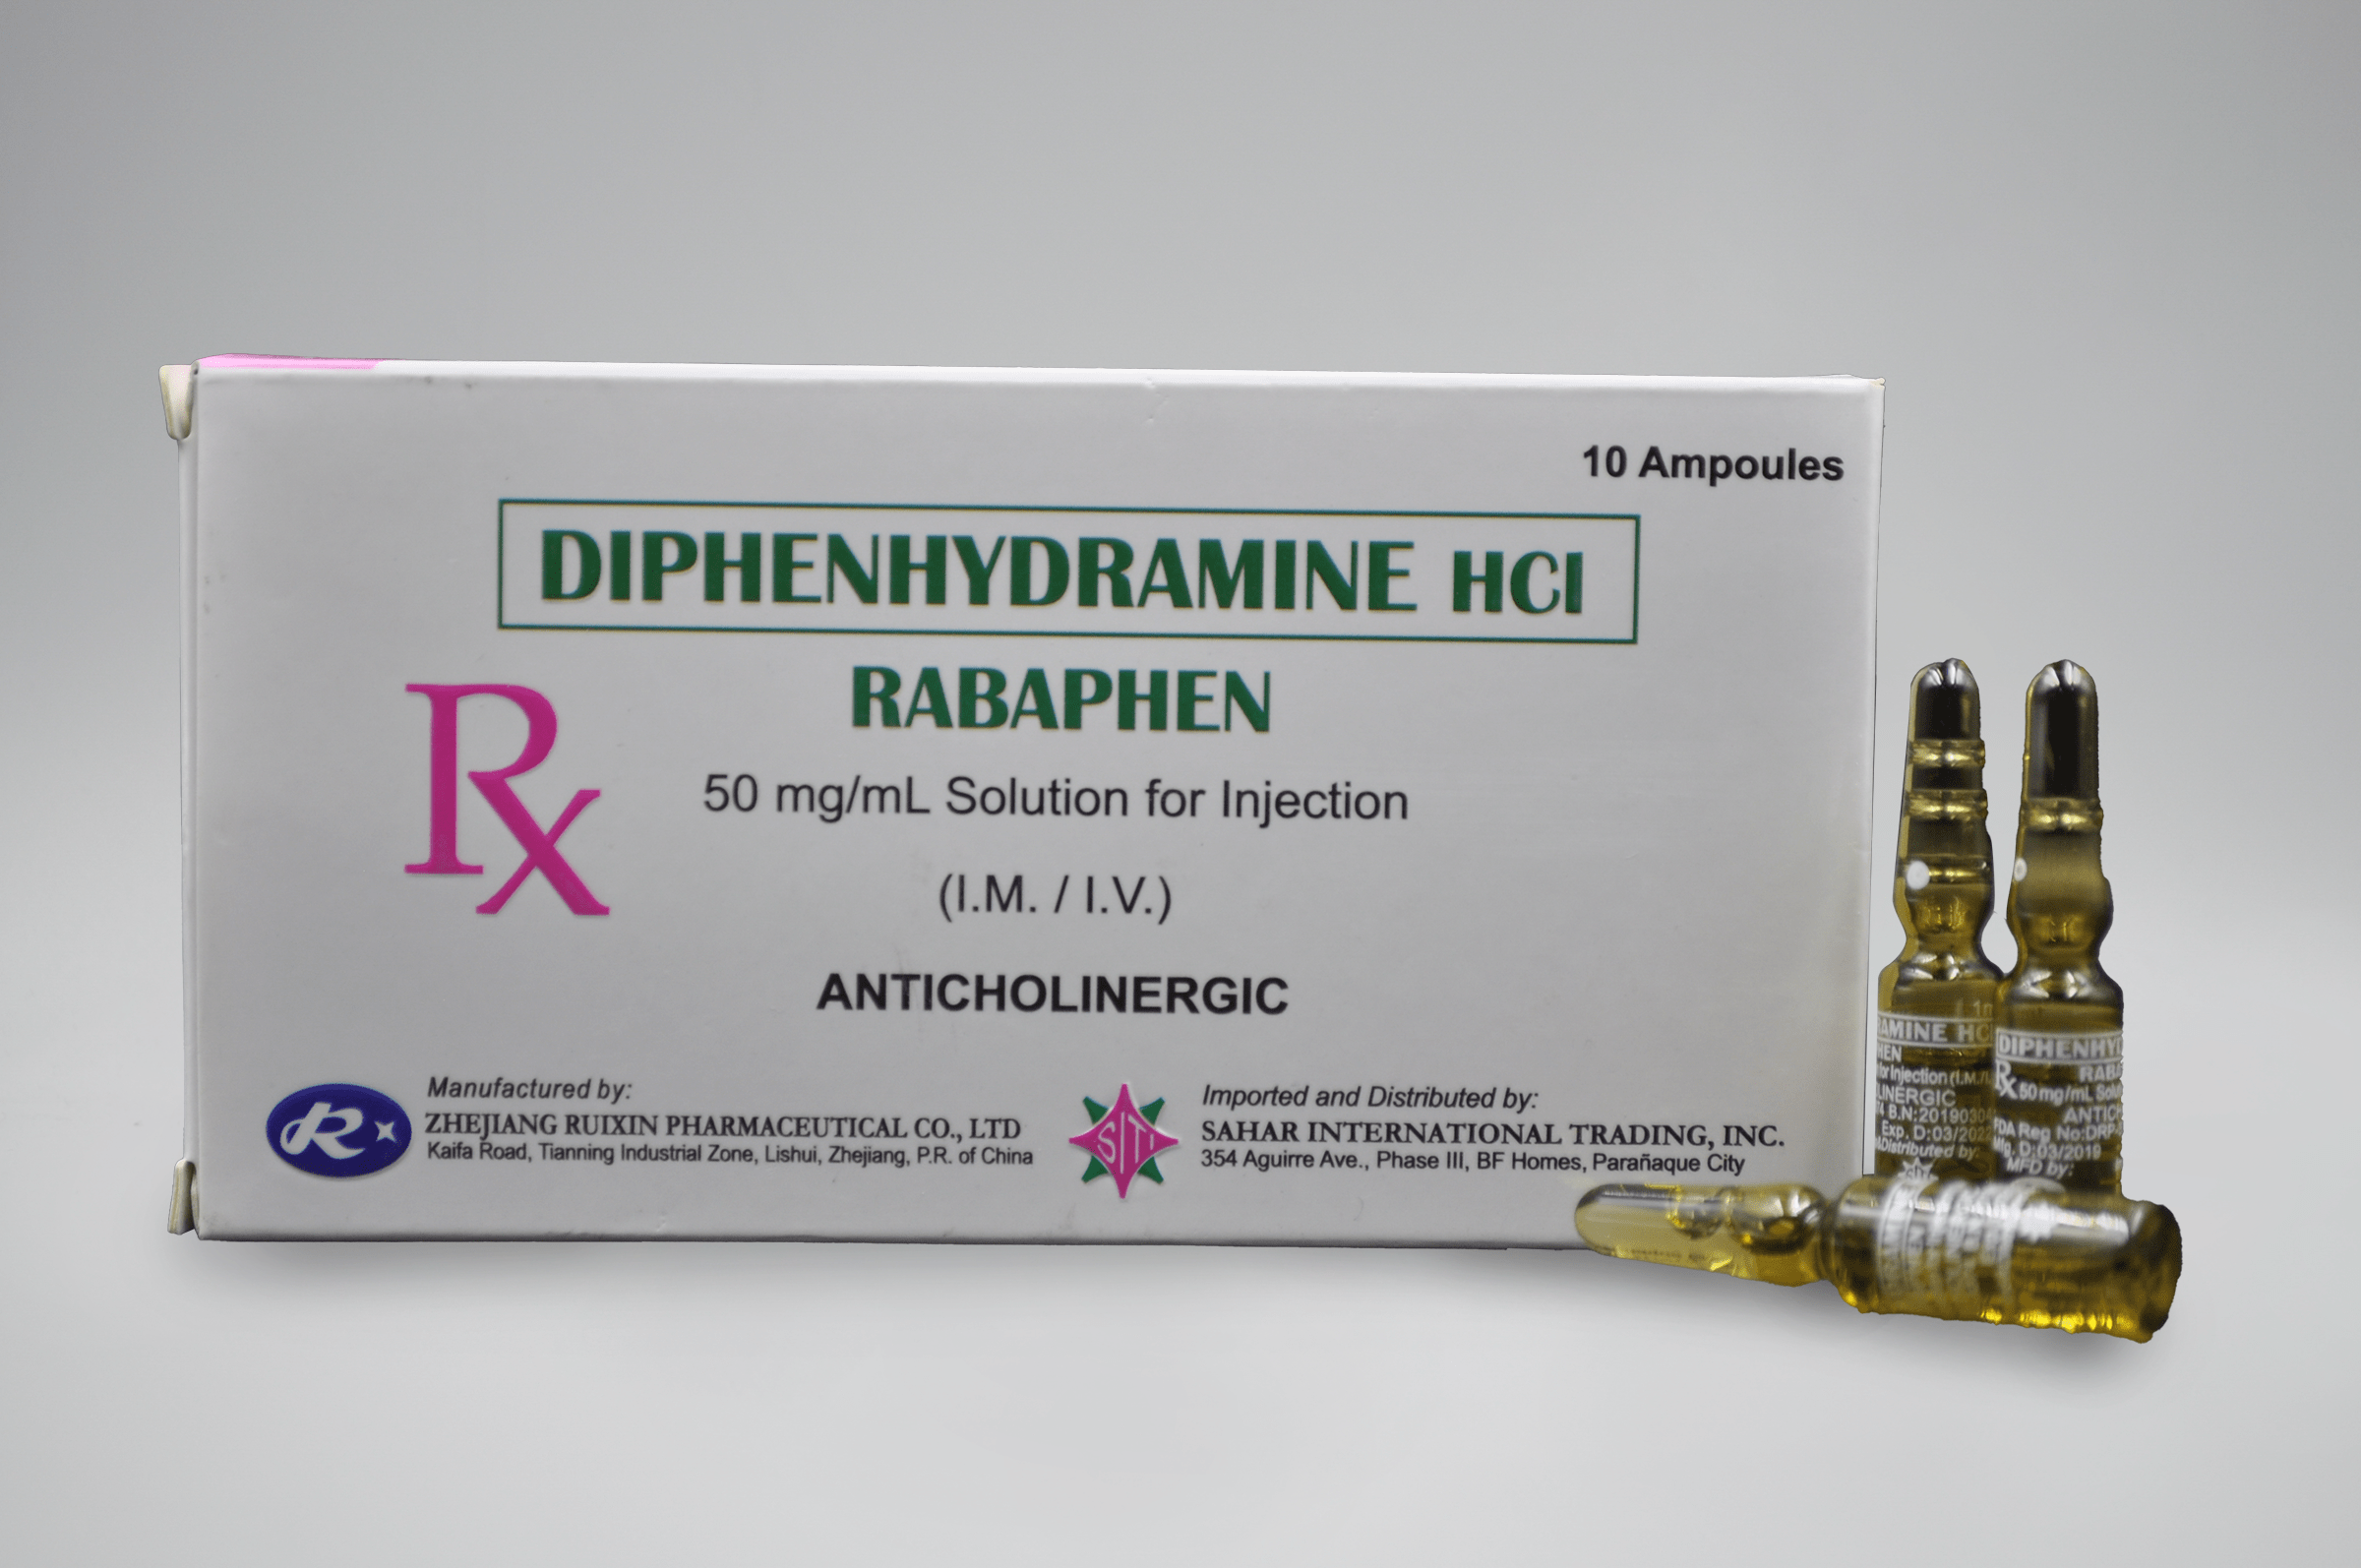 DIPHENHYDRAMINE HCI (RABAPHEN) 50 mg/mL